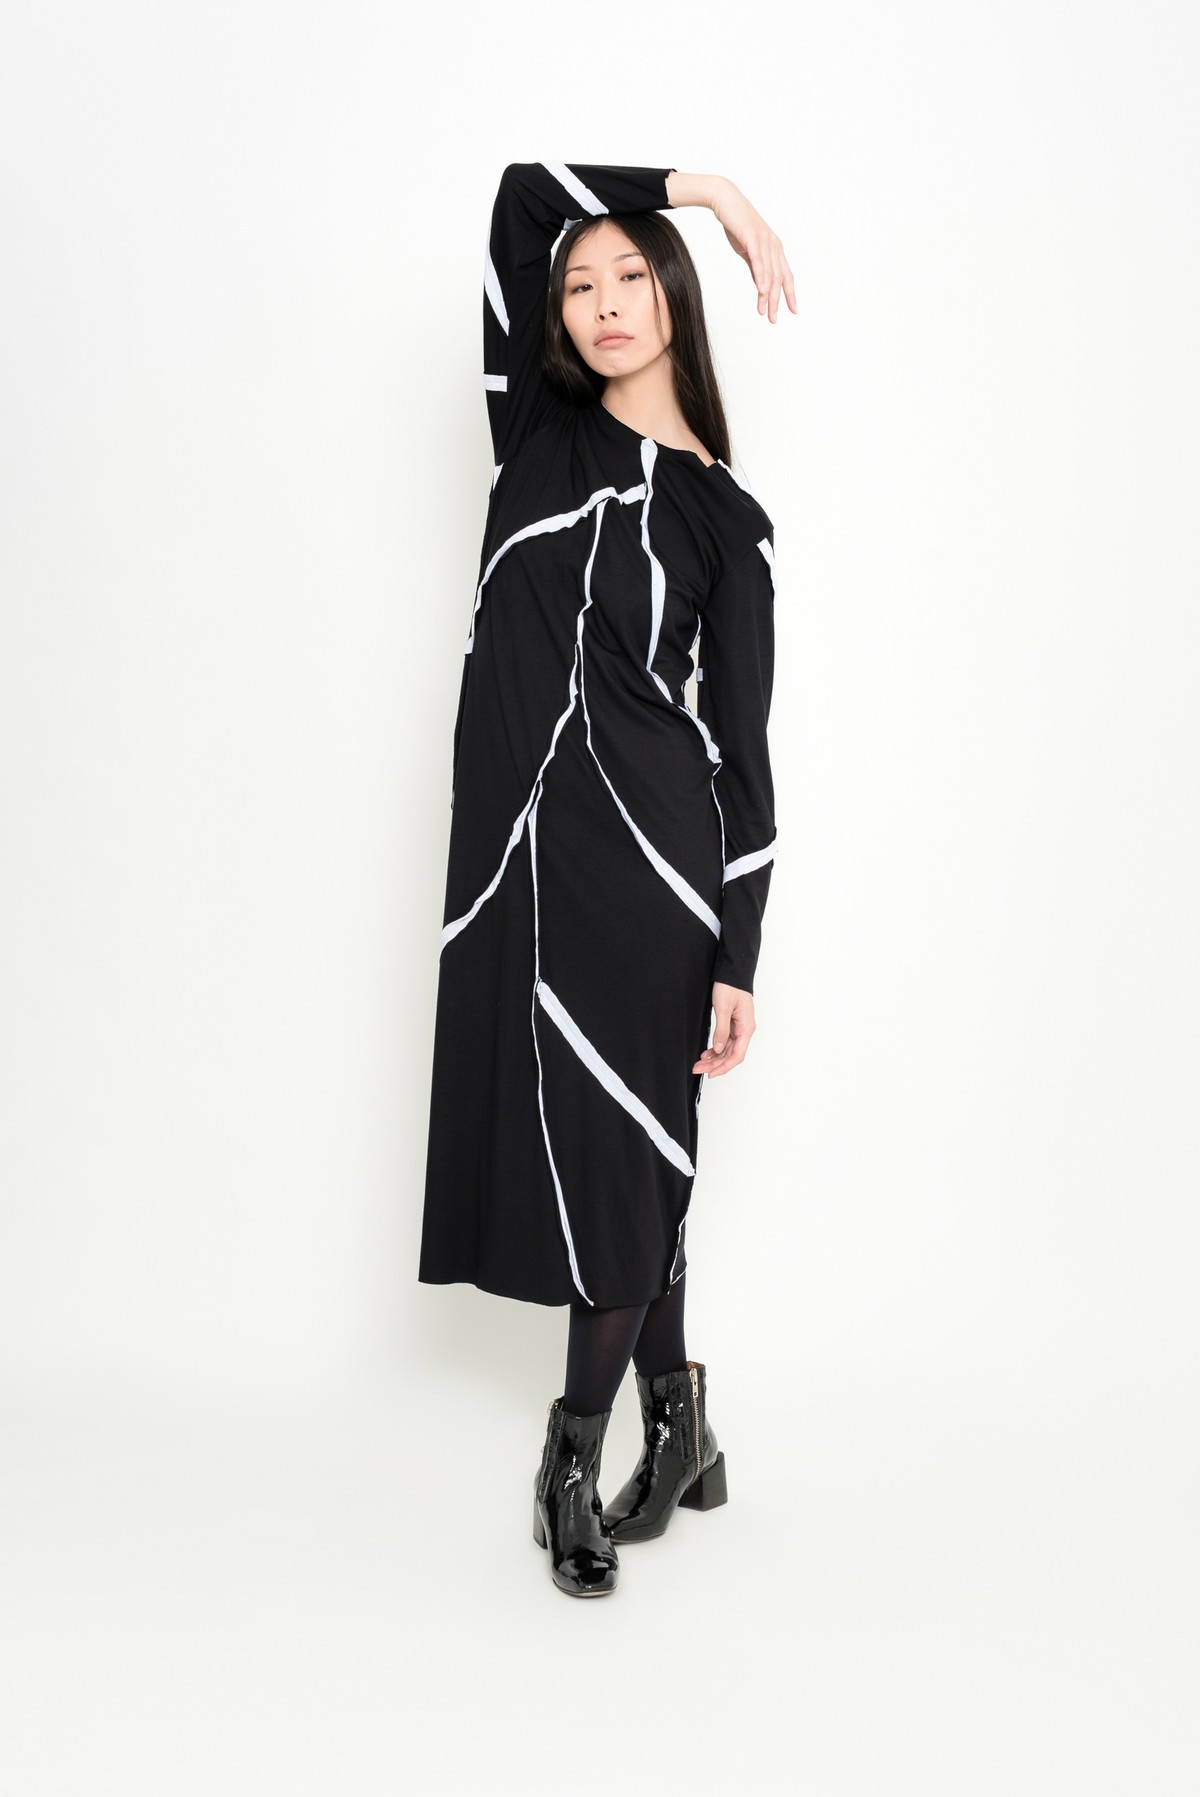 vestido com recortes estilo patchwork | long sleeve dress with patchwork cutouts